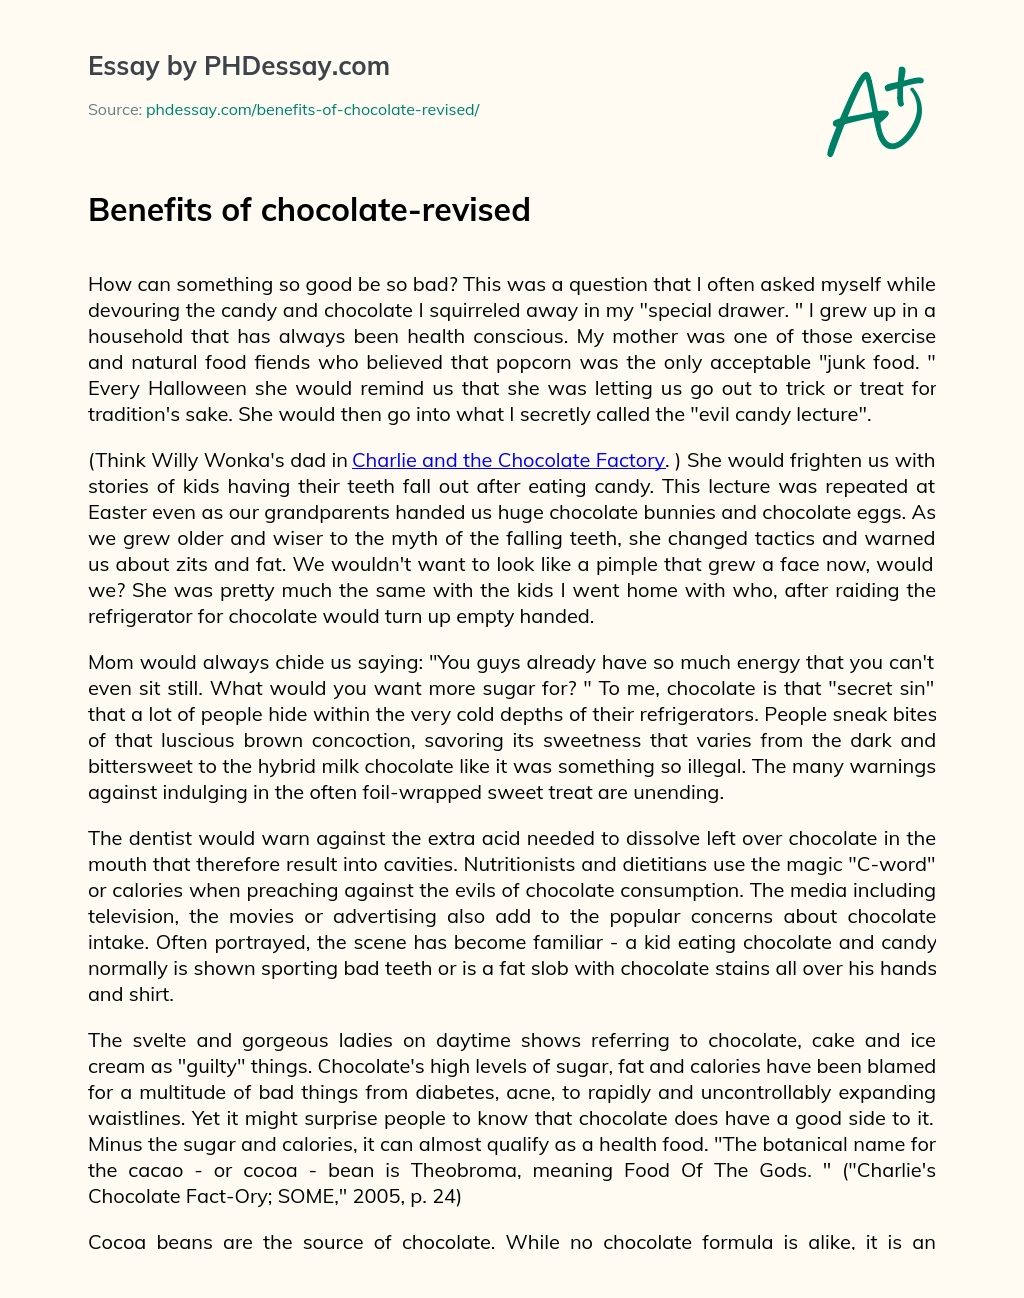 Benefits of chocolate-revised essay